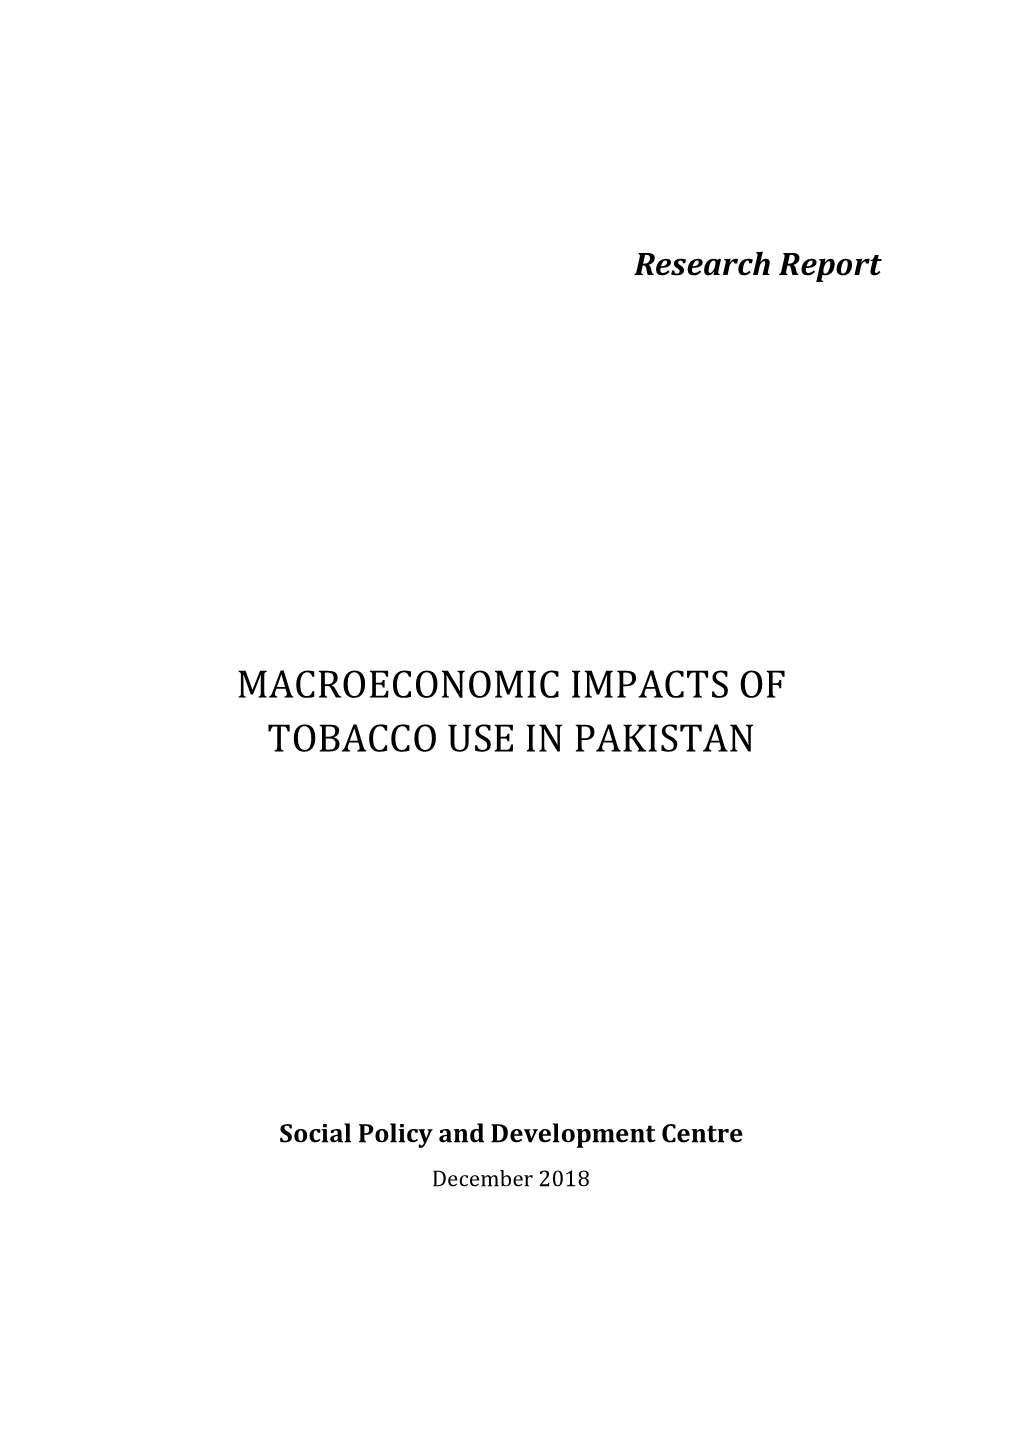 Macroeconomic Impacts of Tobacco Use in Pakistan III